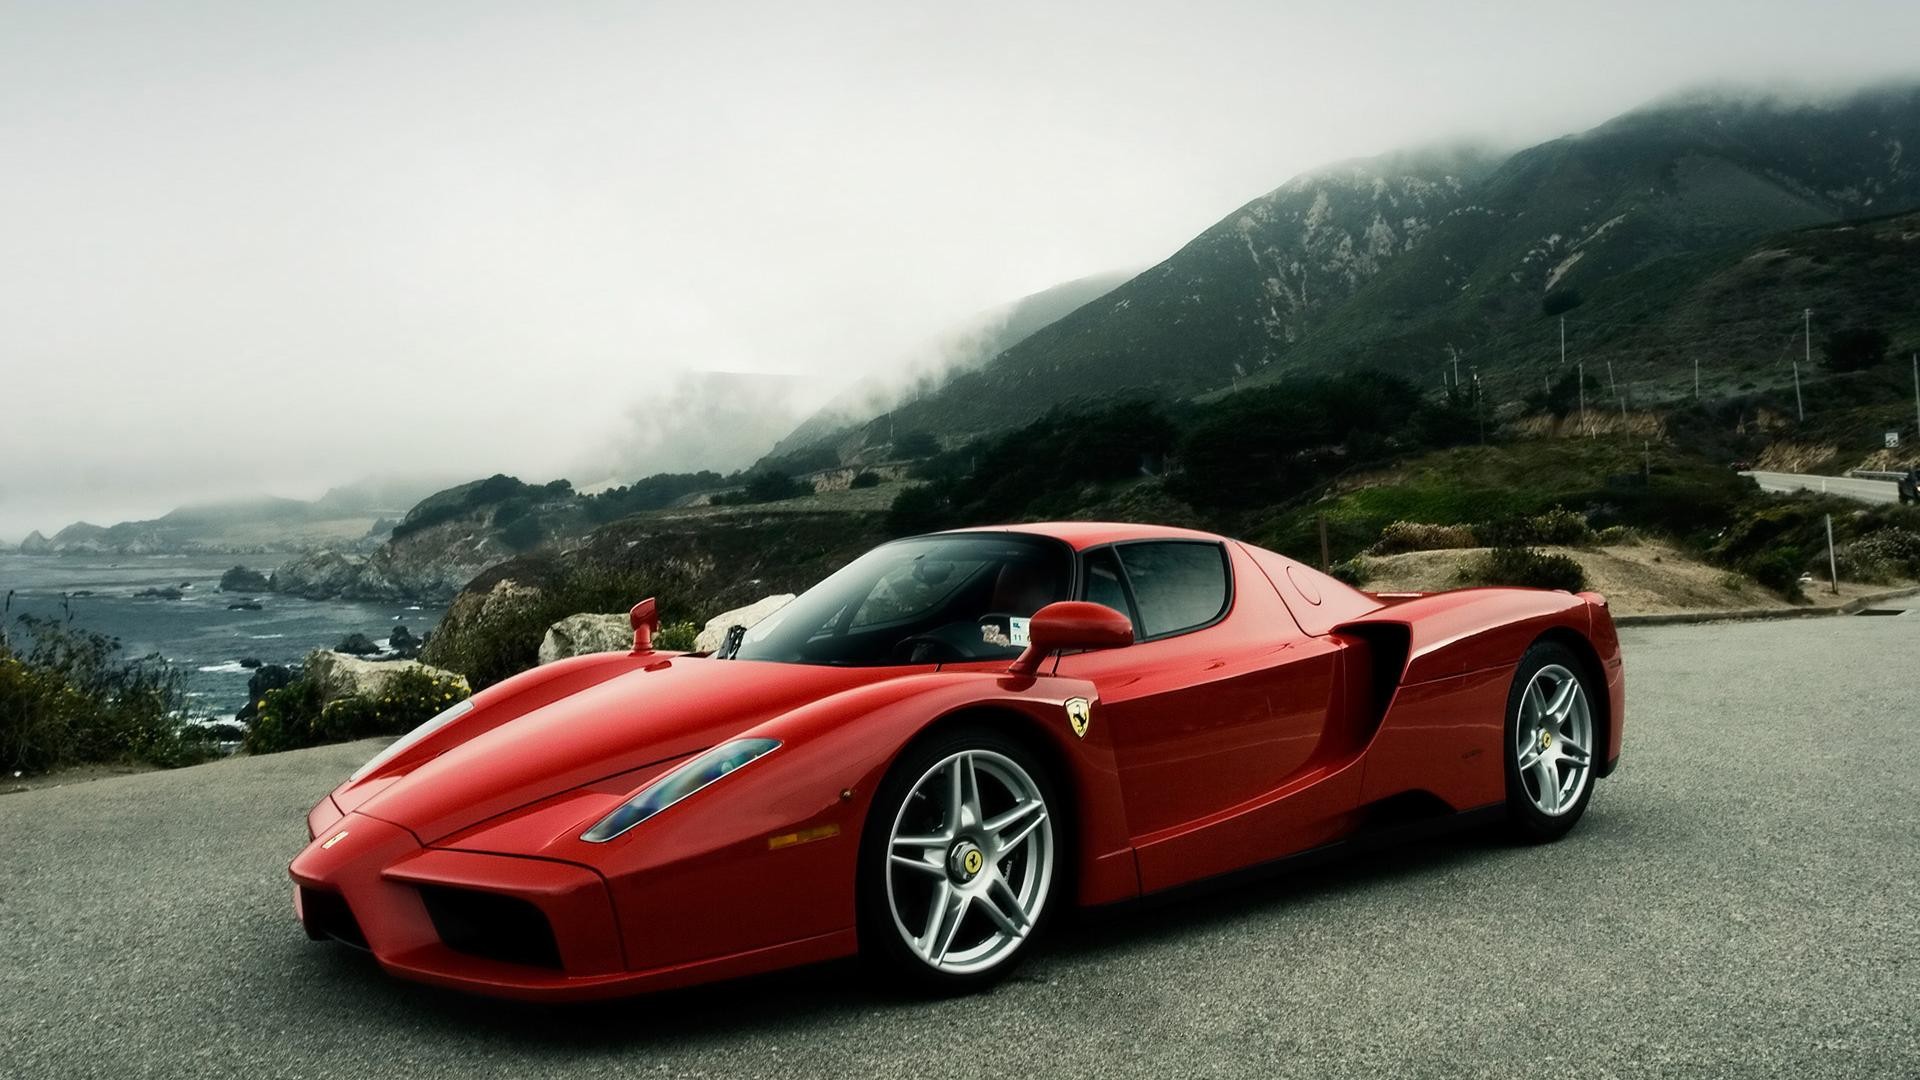 Car Sports Car Ferrari Ferrari Enzo Wallpapers Hd Desktop And Mobile Backgrounds